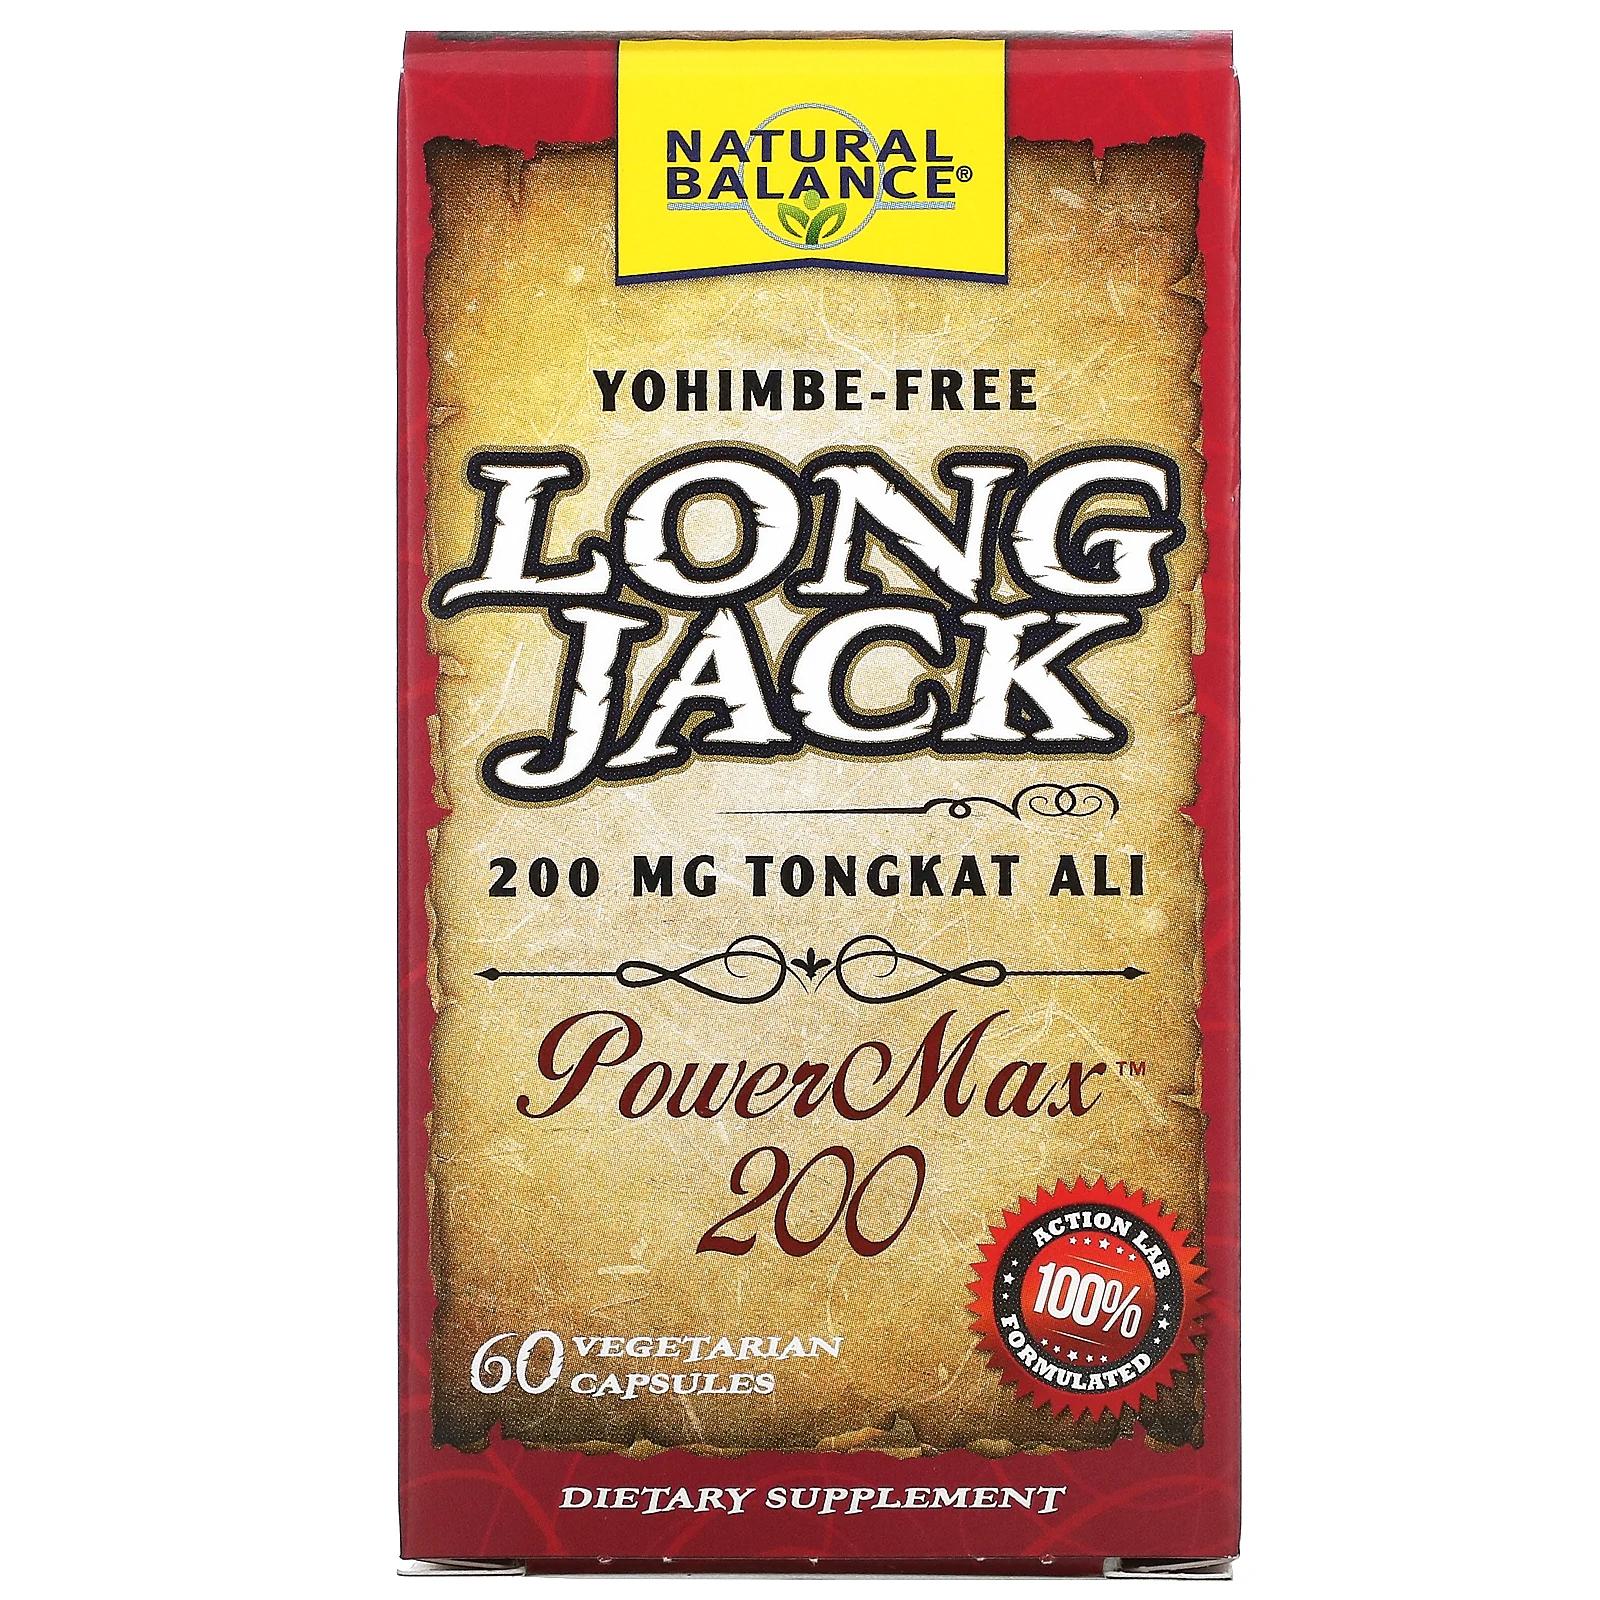 Natural Balance Long Jack PowerMax 200 60 вегетерианских капсул natural balance alkamax щелочной усилитель 30 капсул